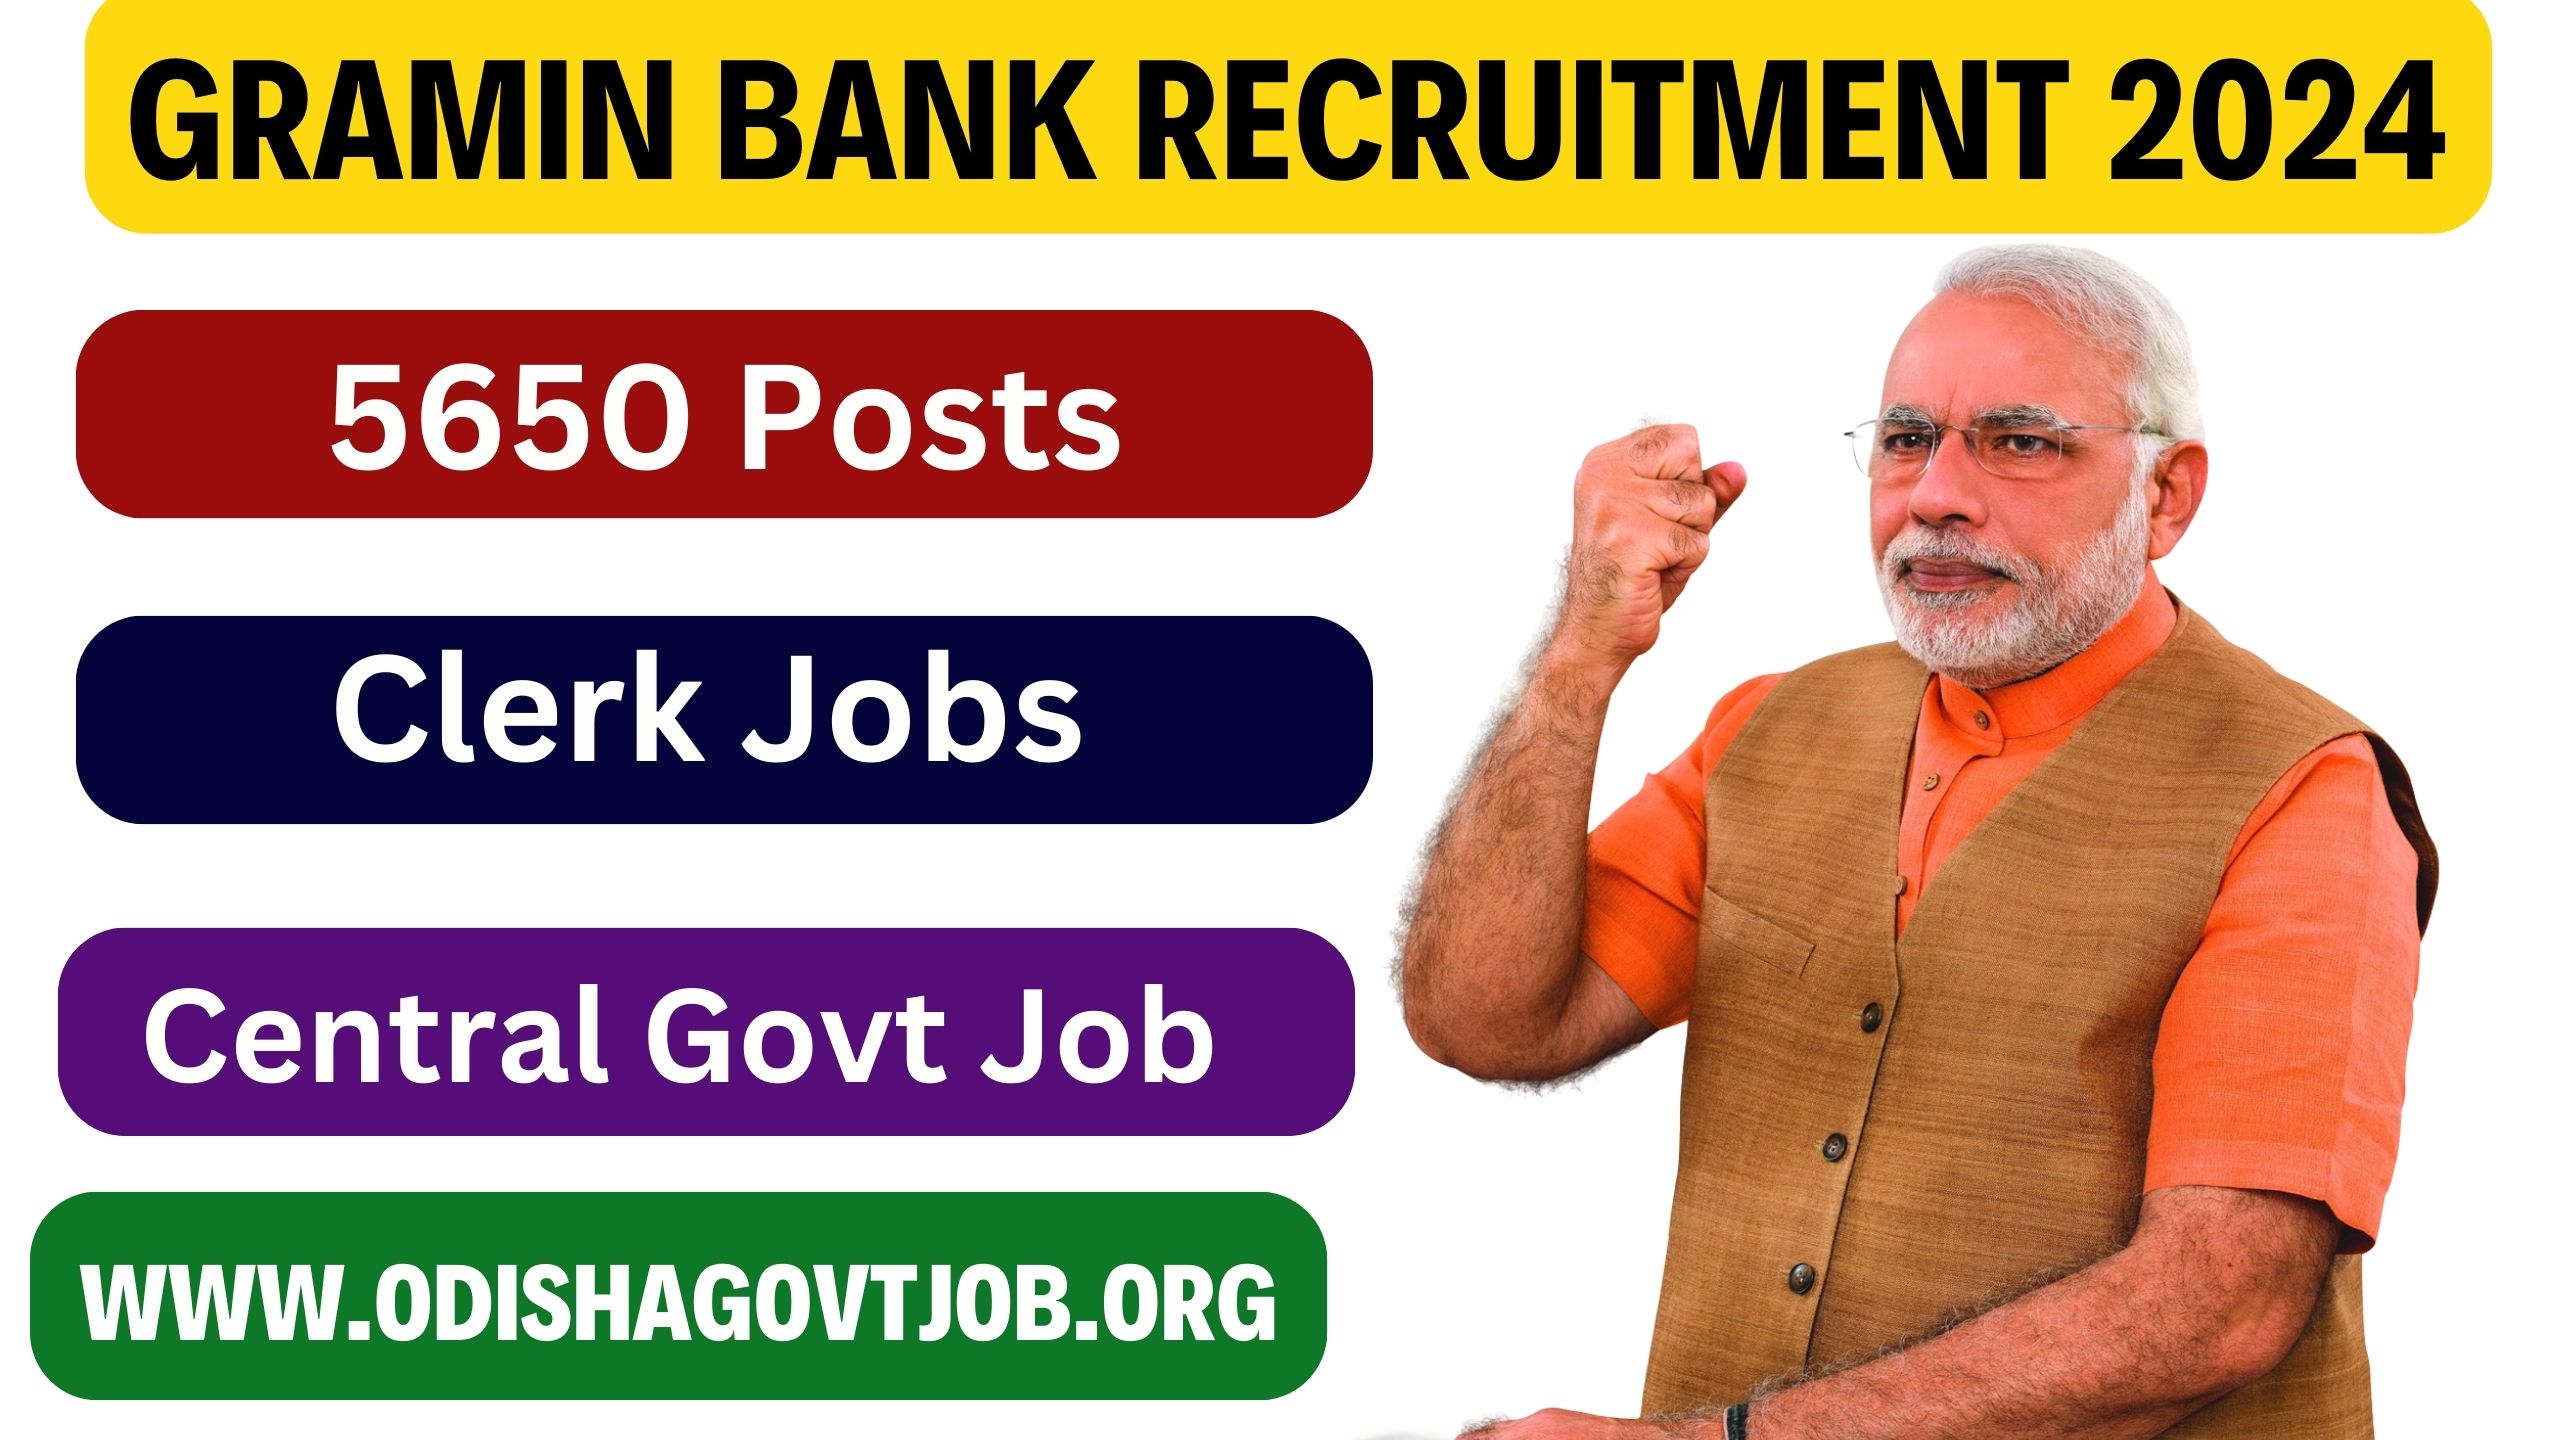 Gramin Bank Recruitment 2024